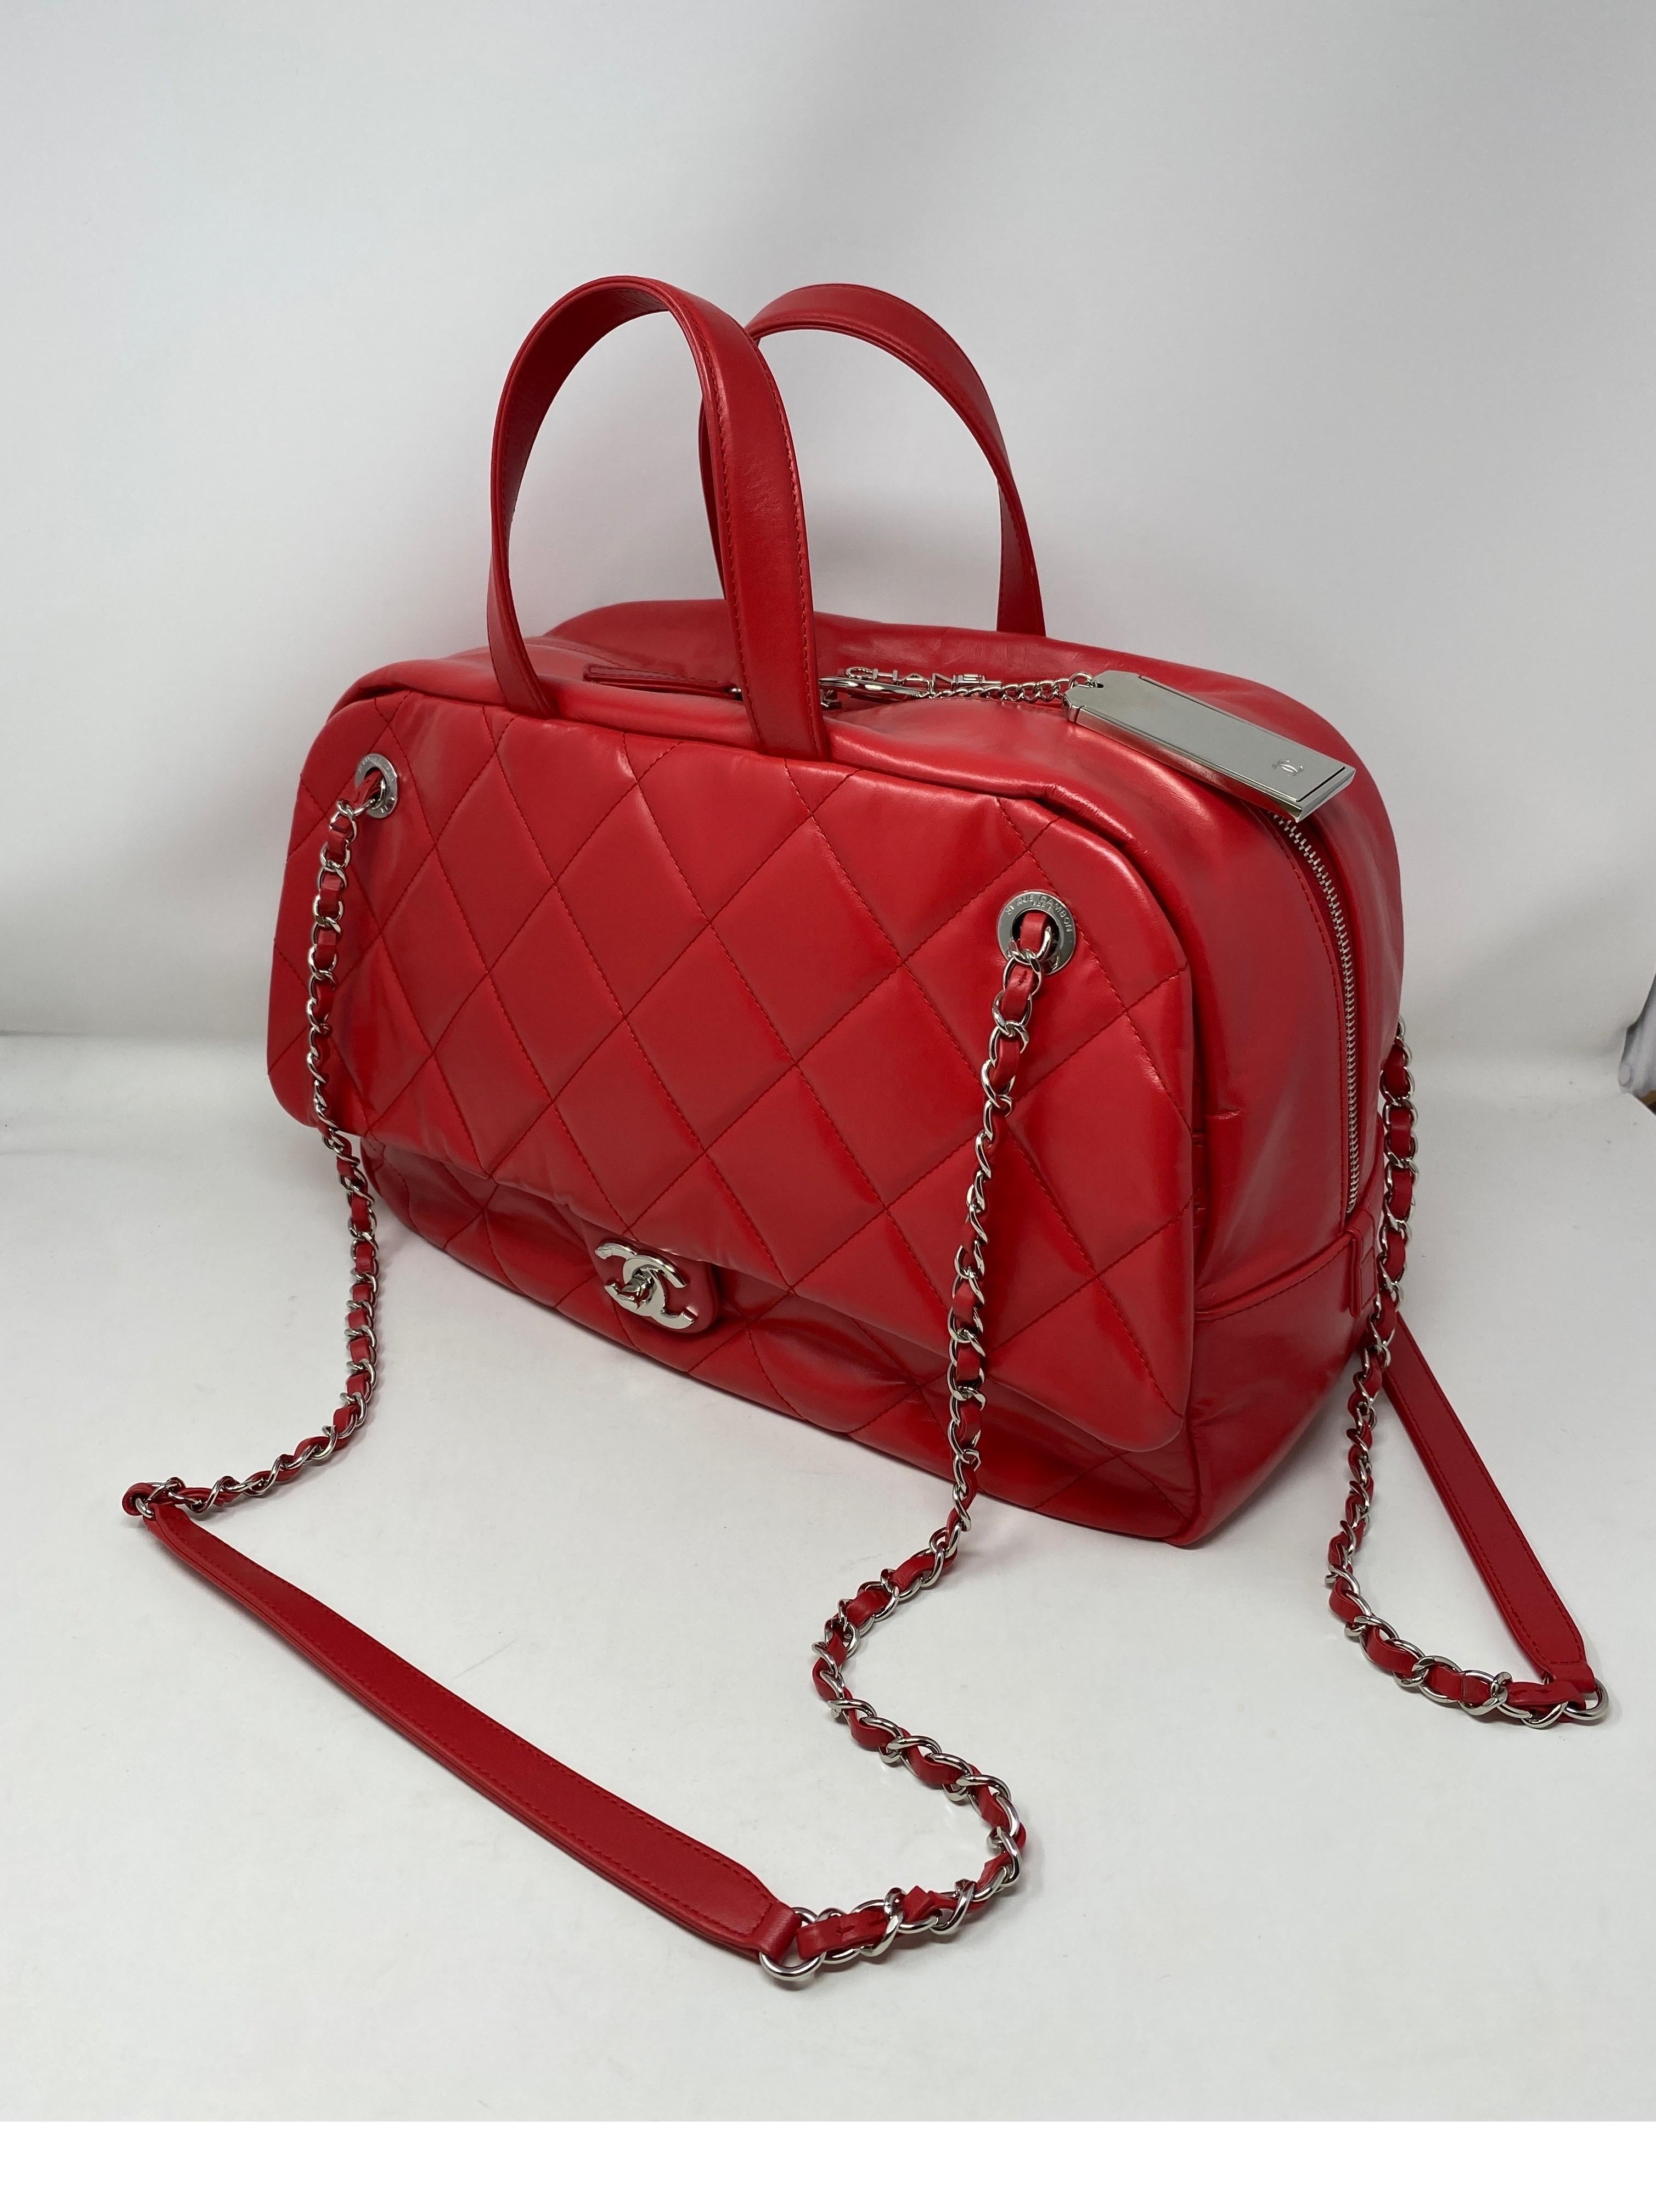 Chanel Large Red Bowler Bag  10